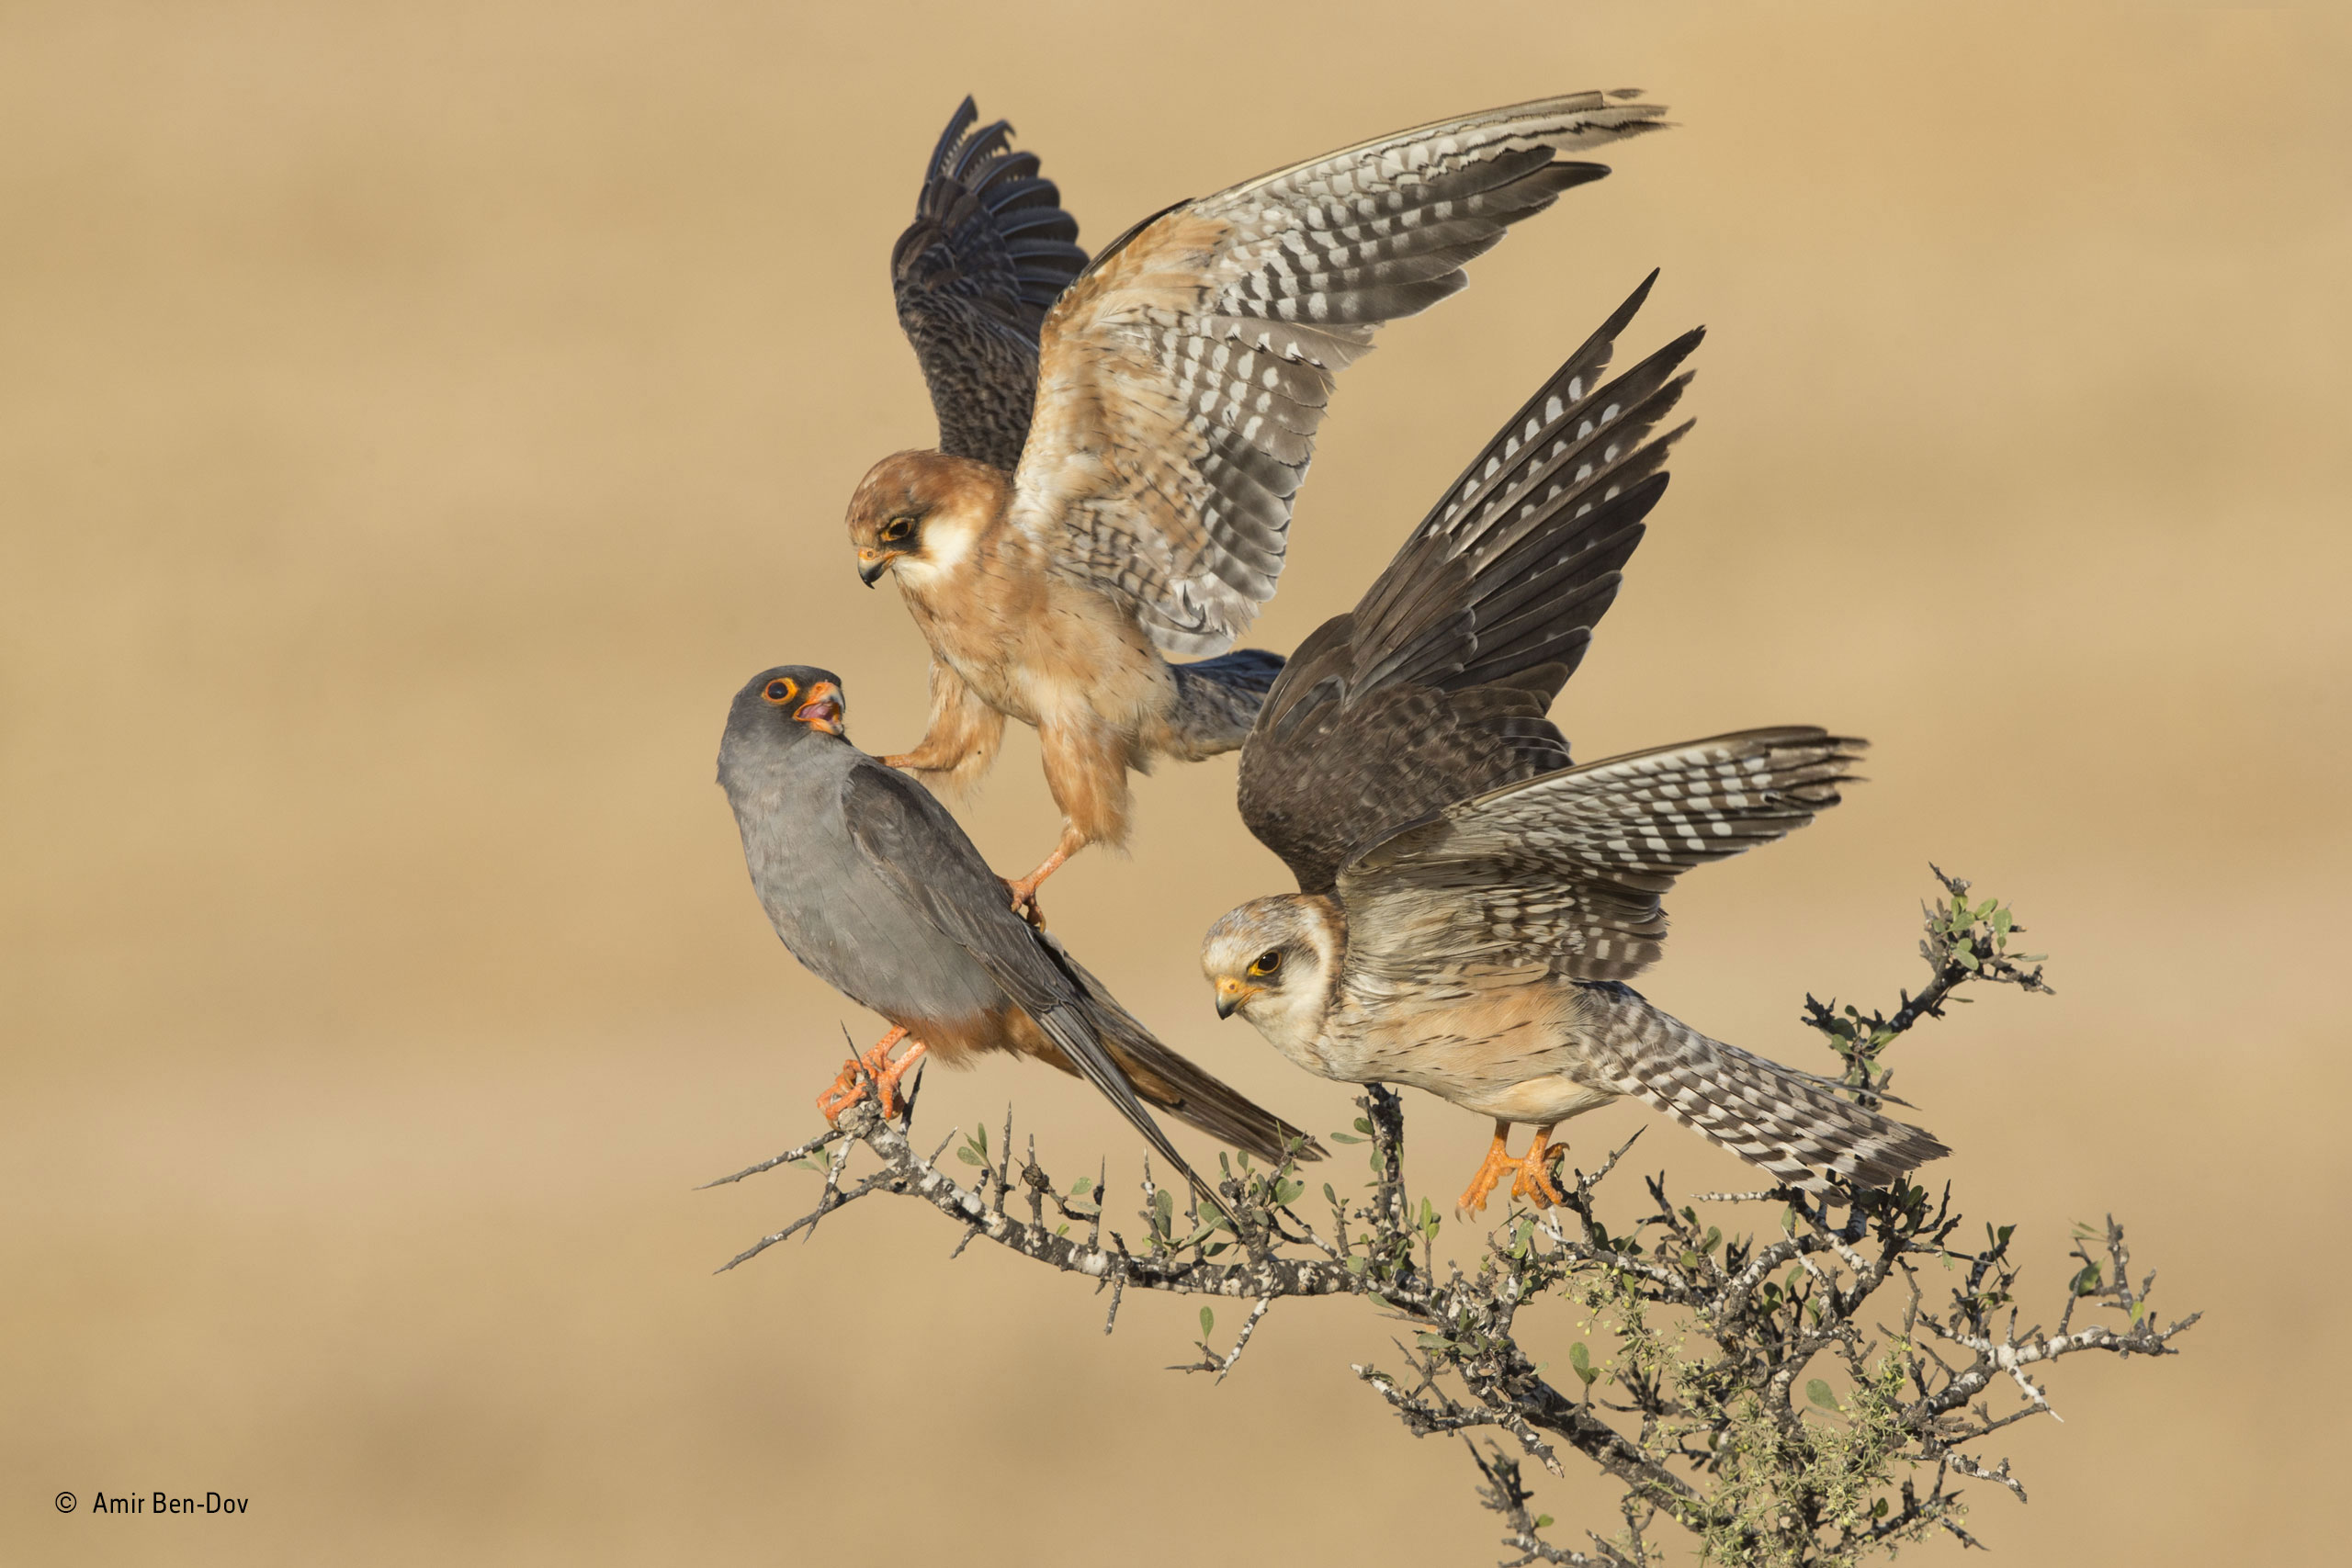 Amir Ben-Dov (Israel): The company of three Birds / Wildlife Photographer of the Year 2015 